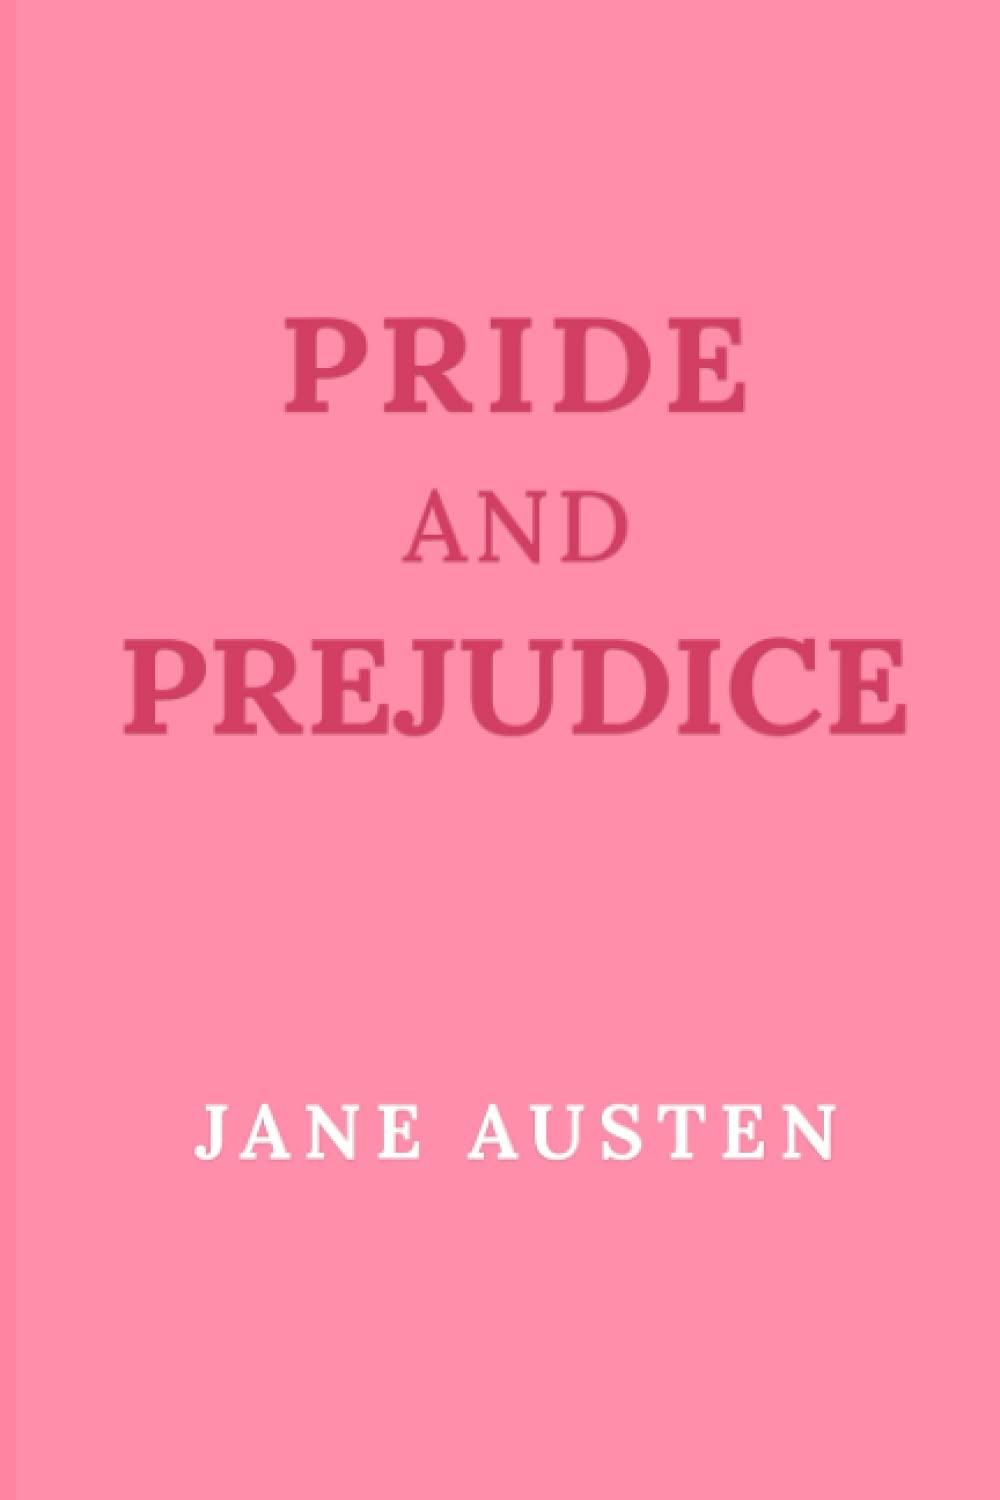 Pride and Prejudice by Jane Austen (1813)